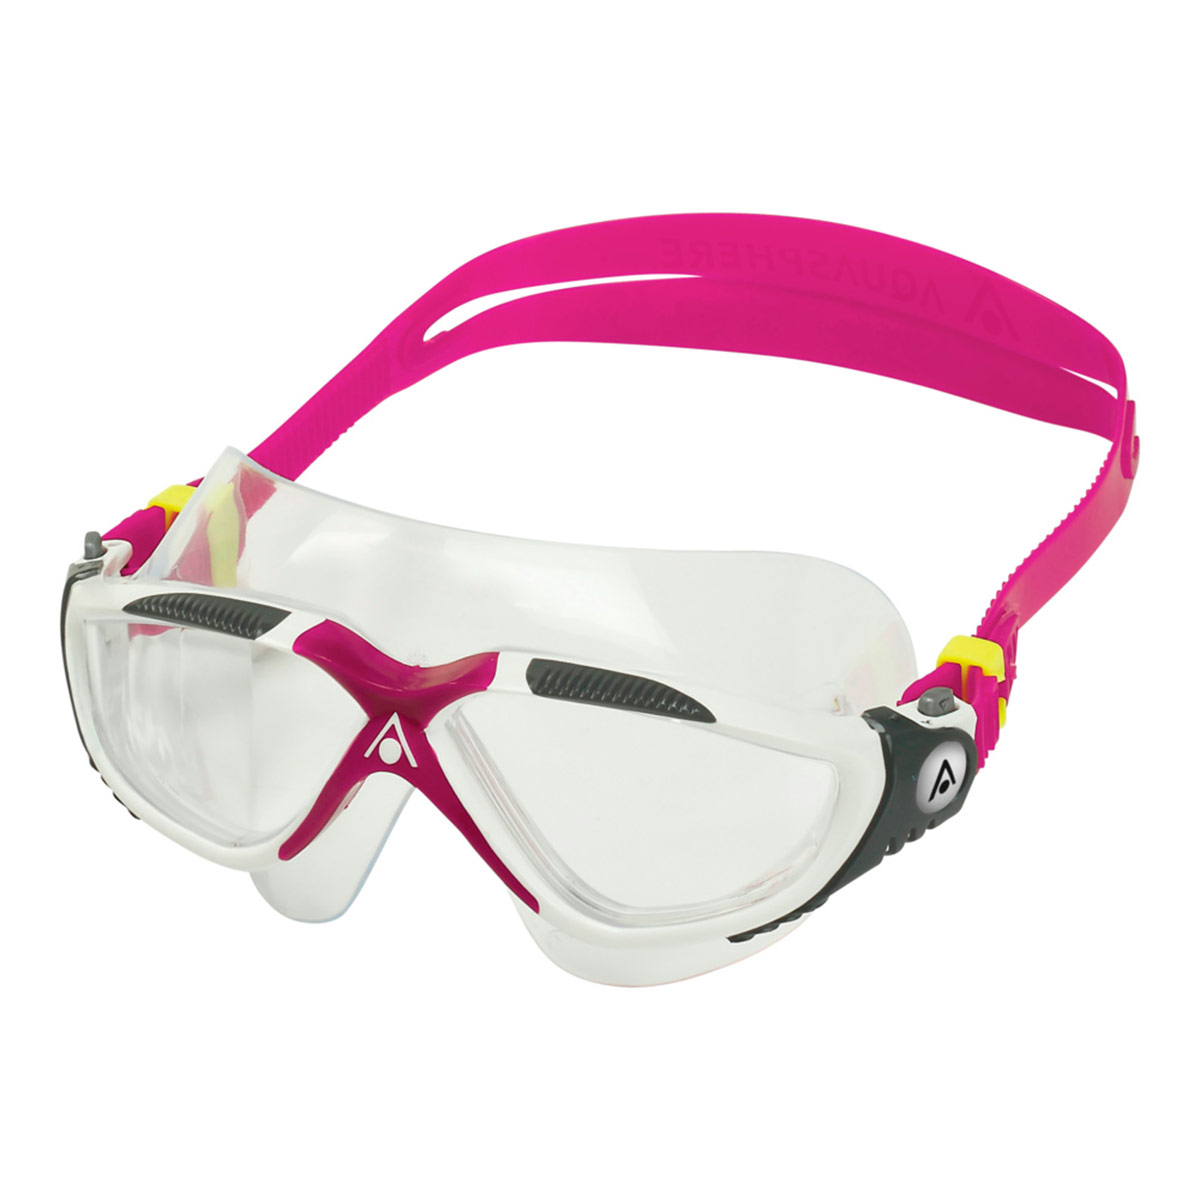 Aquasphere Vista Clear Lens Goggles - White/ Raspberry